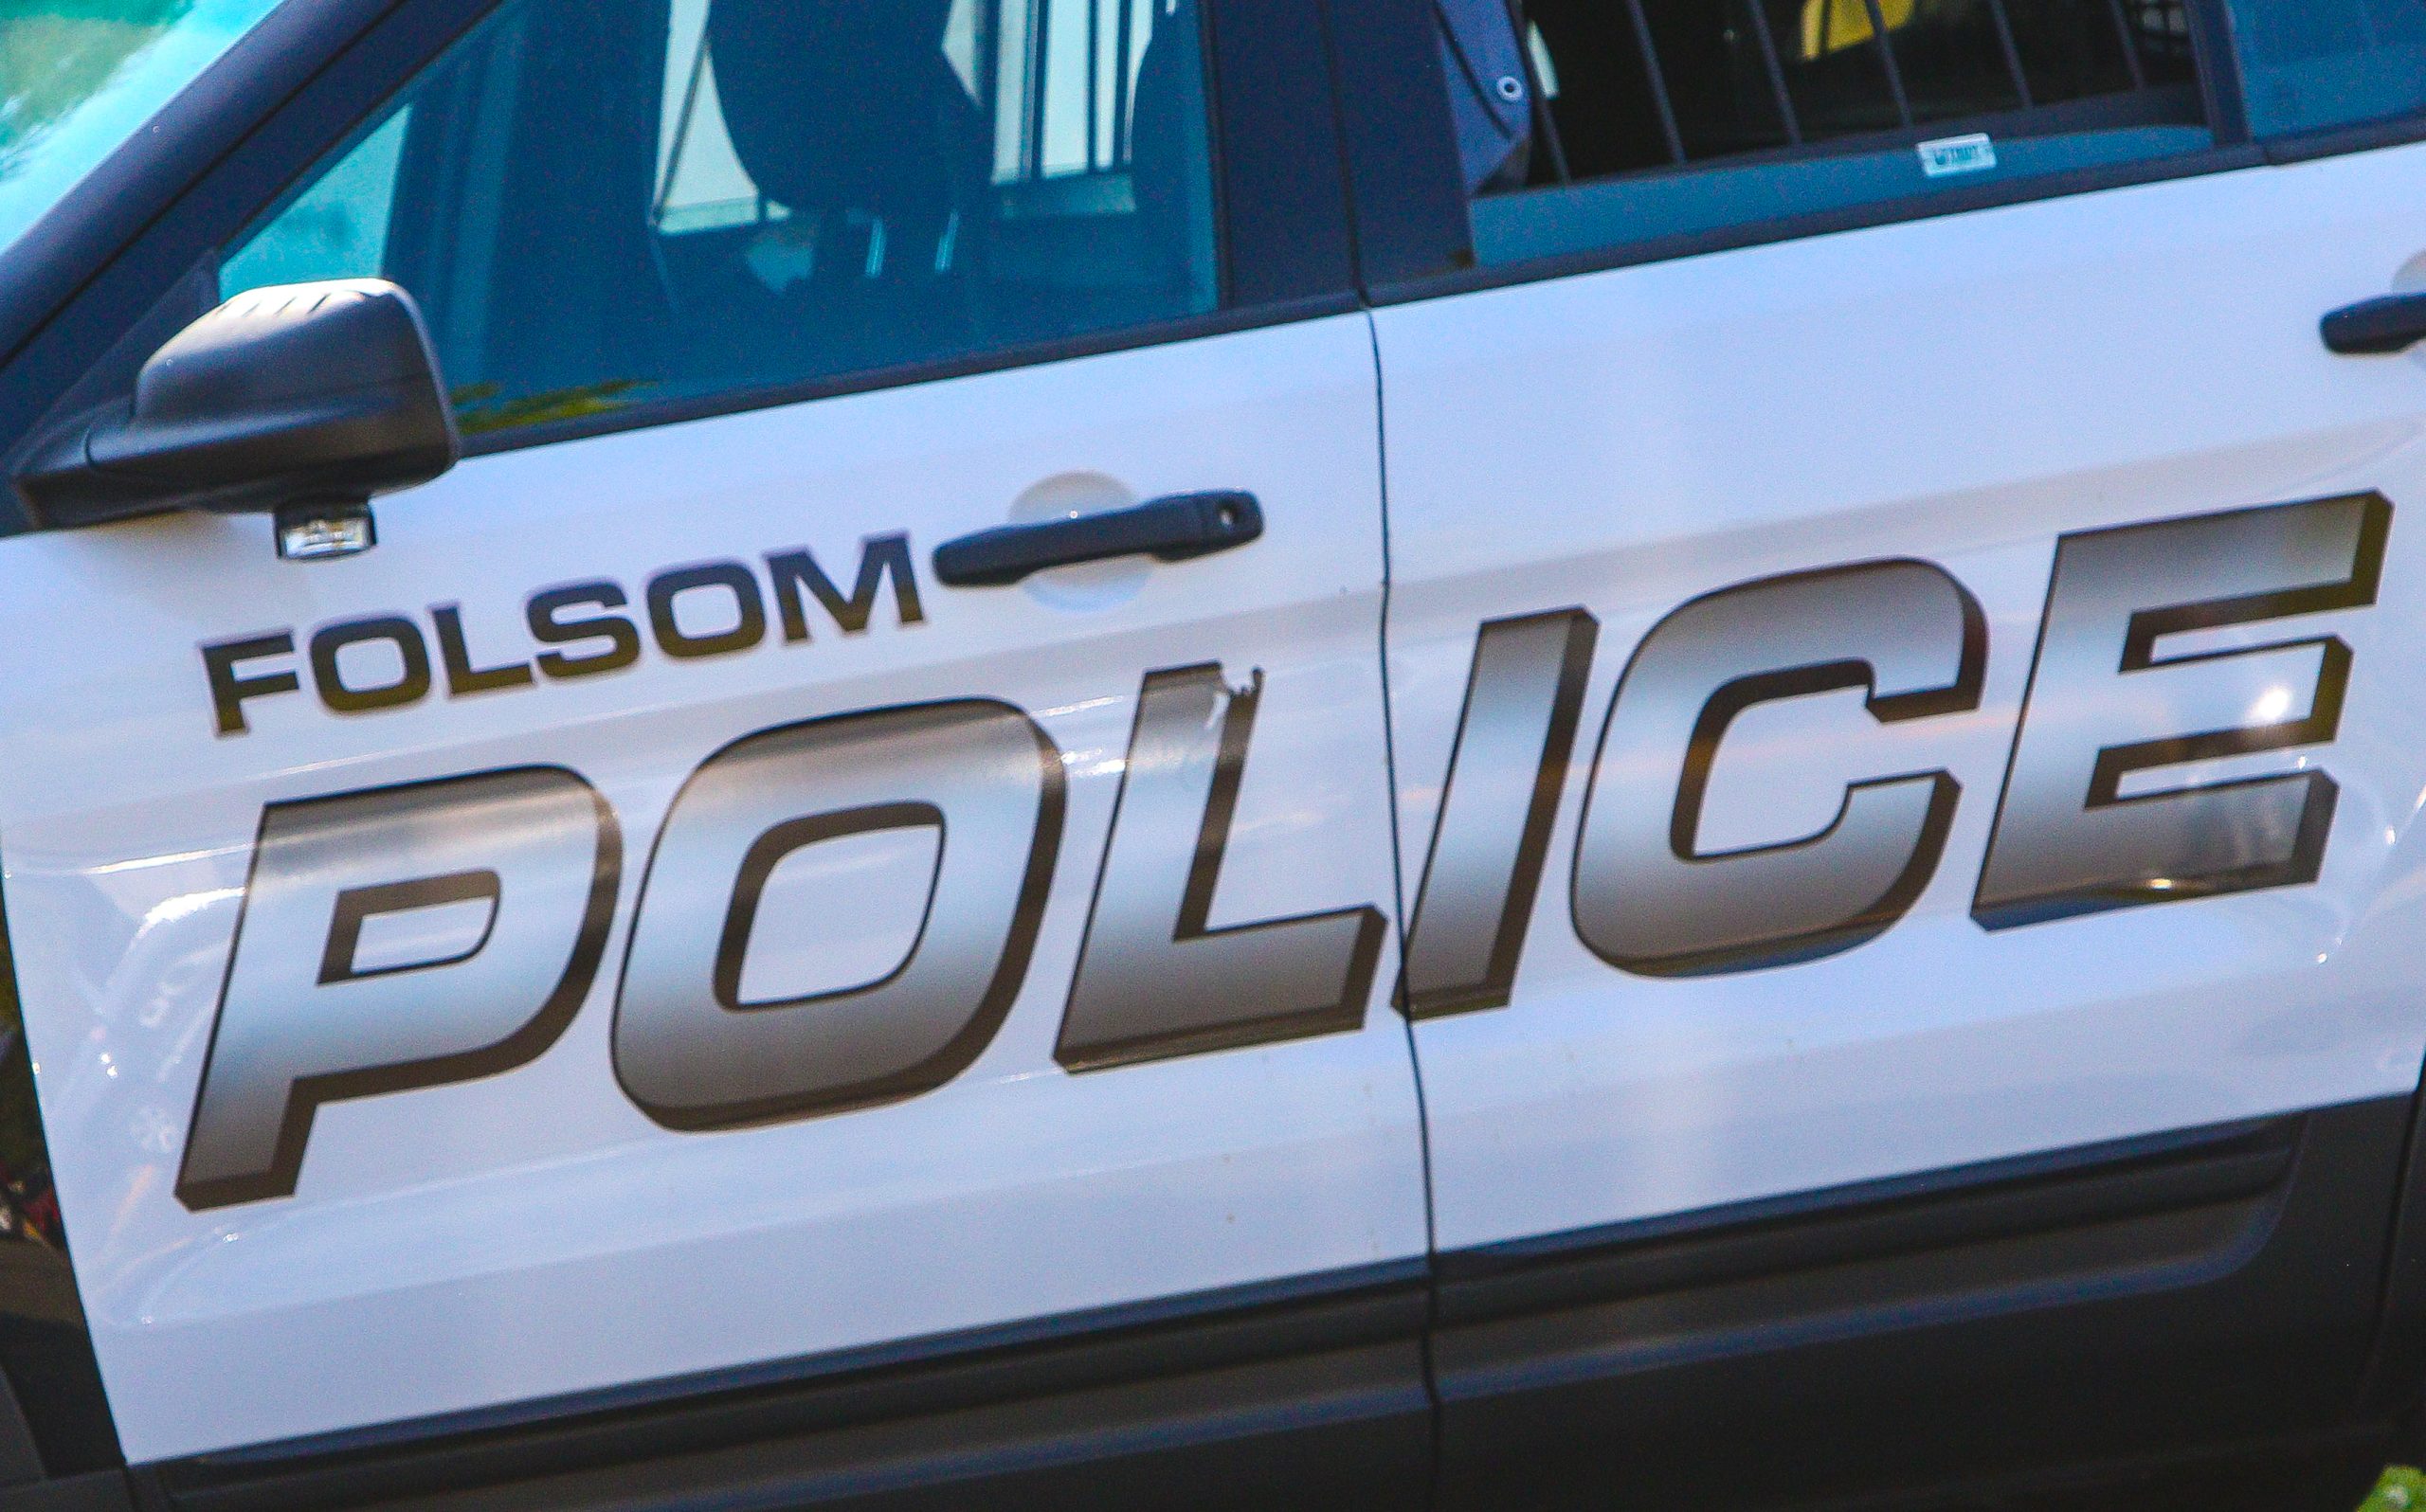 Organized theft pursuit, arrest halts Folsom light rail service